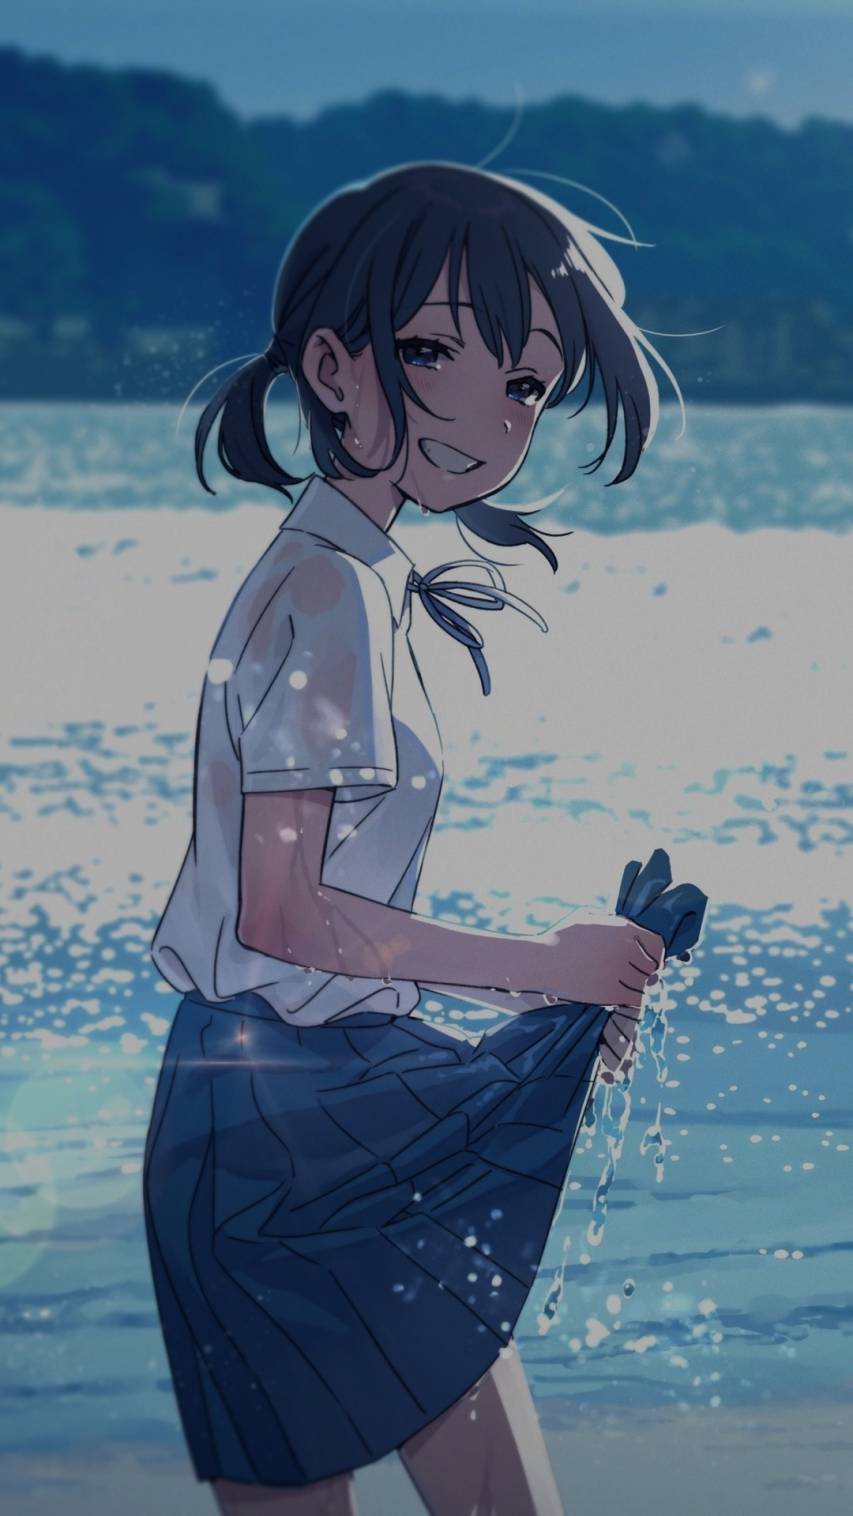 Cute Anime Beach iPhone Wallpapers free